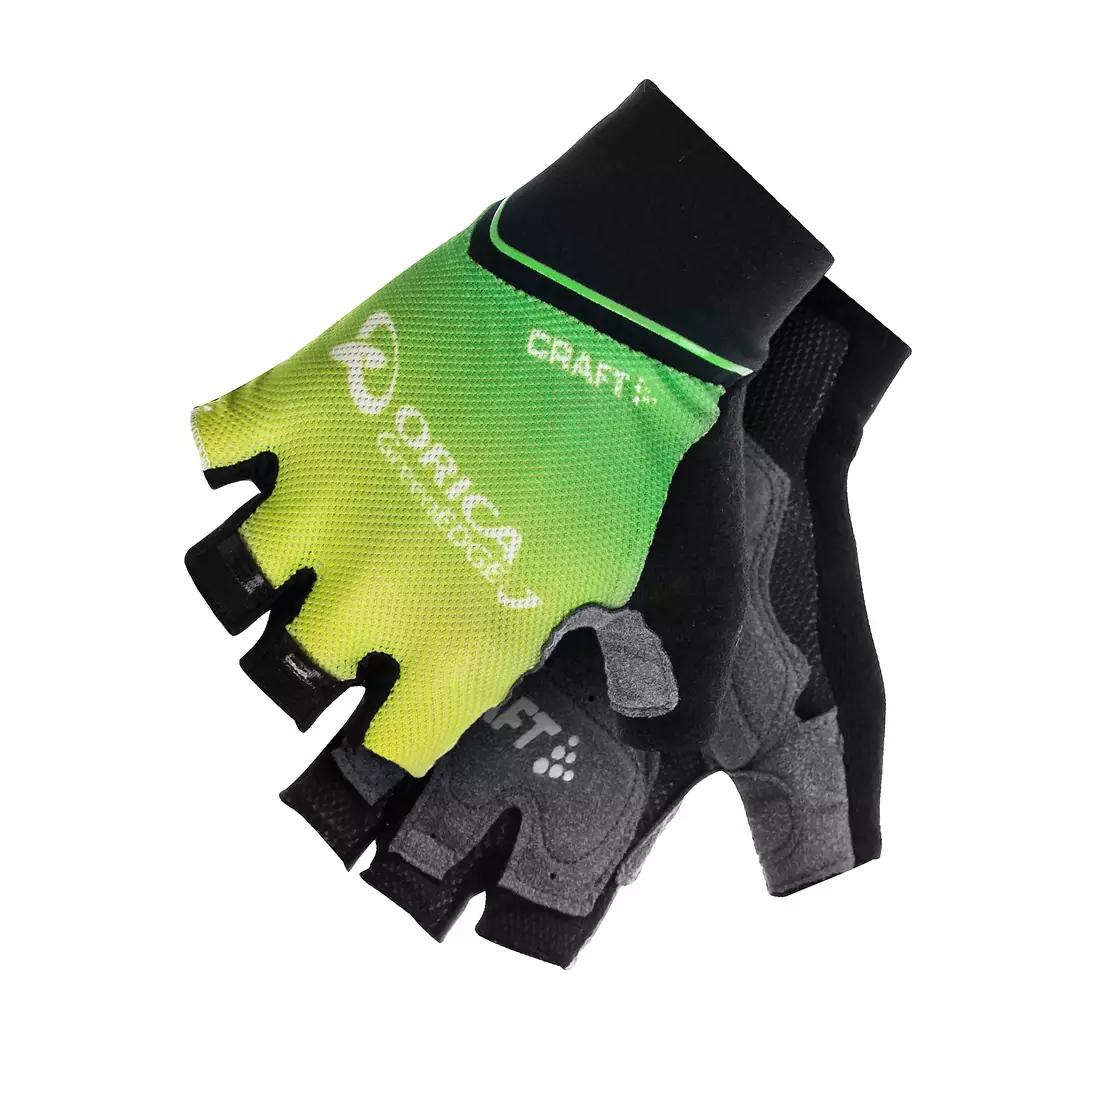 CRAFT ORICA GreenEDGE 2014 cycling gloves 1903454-2900